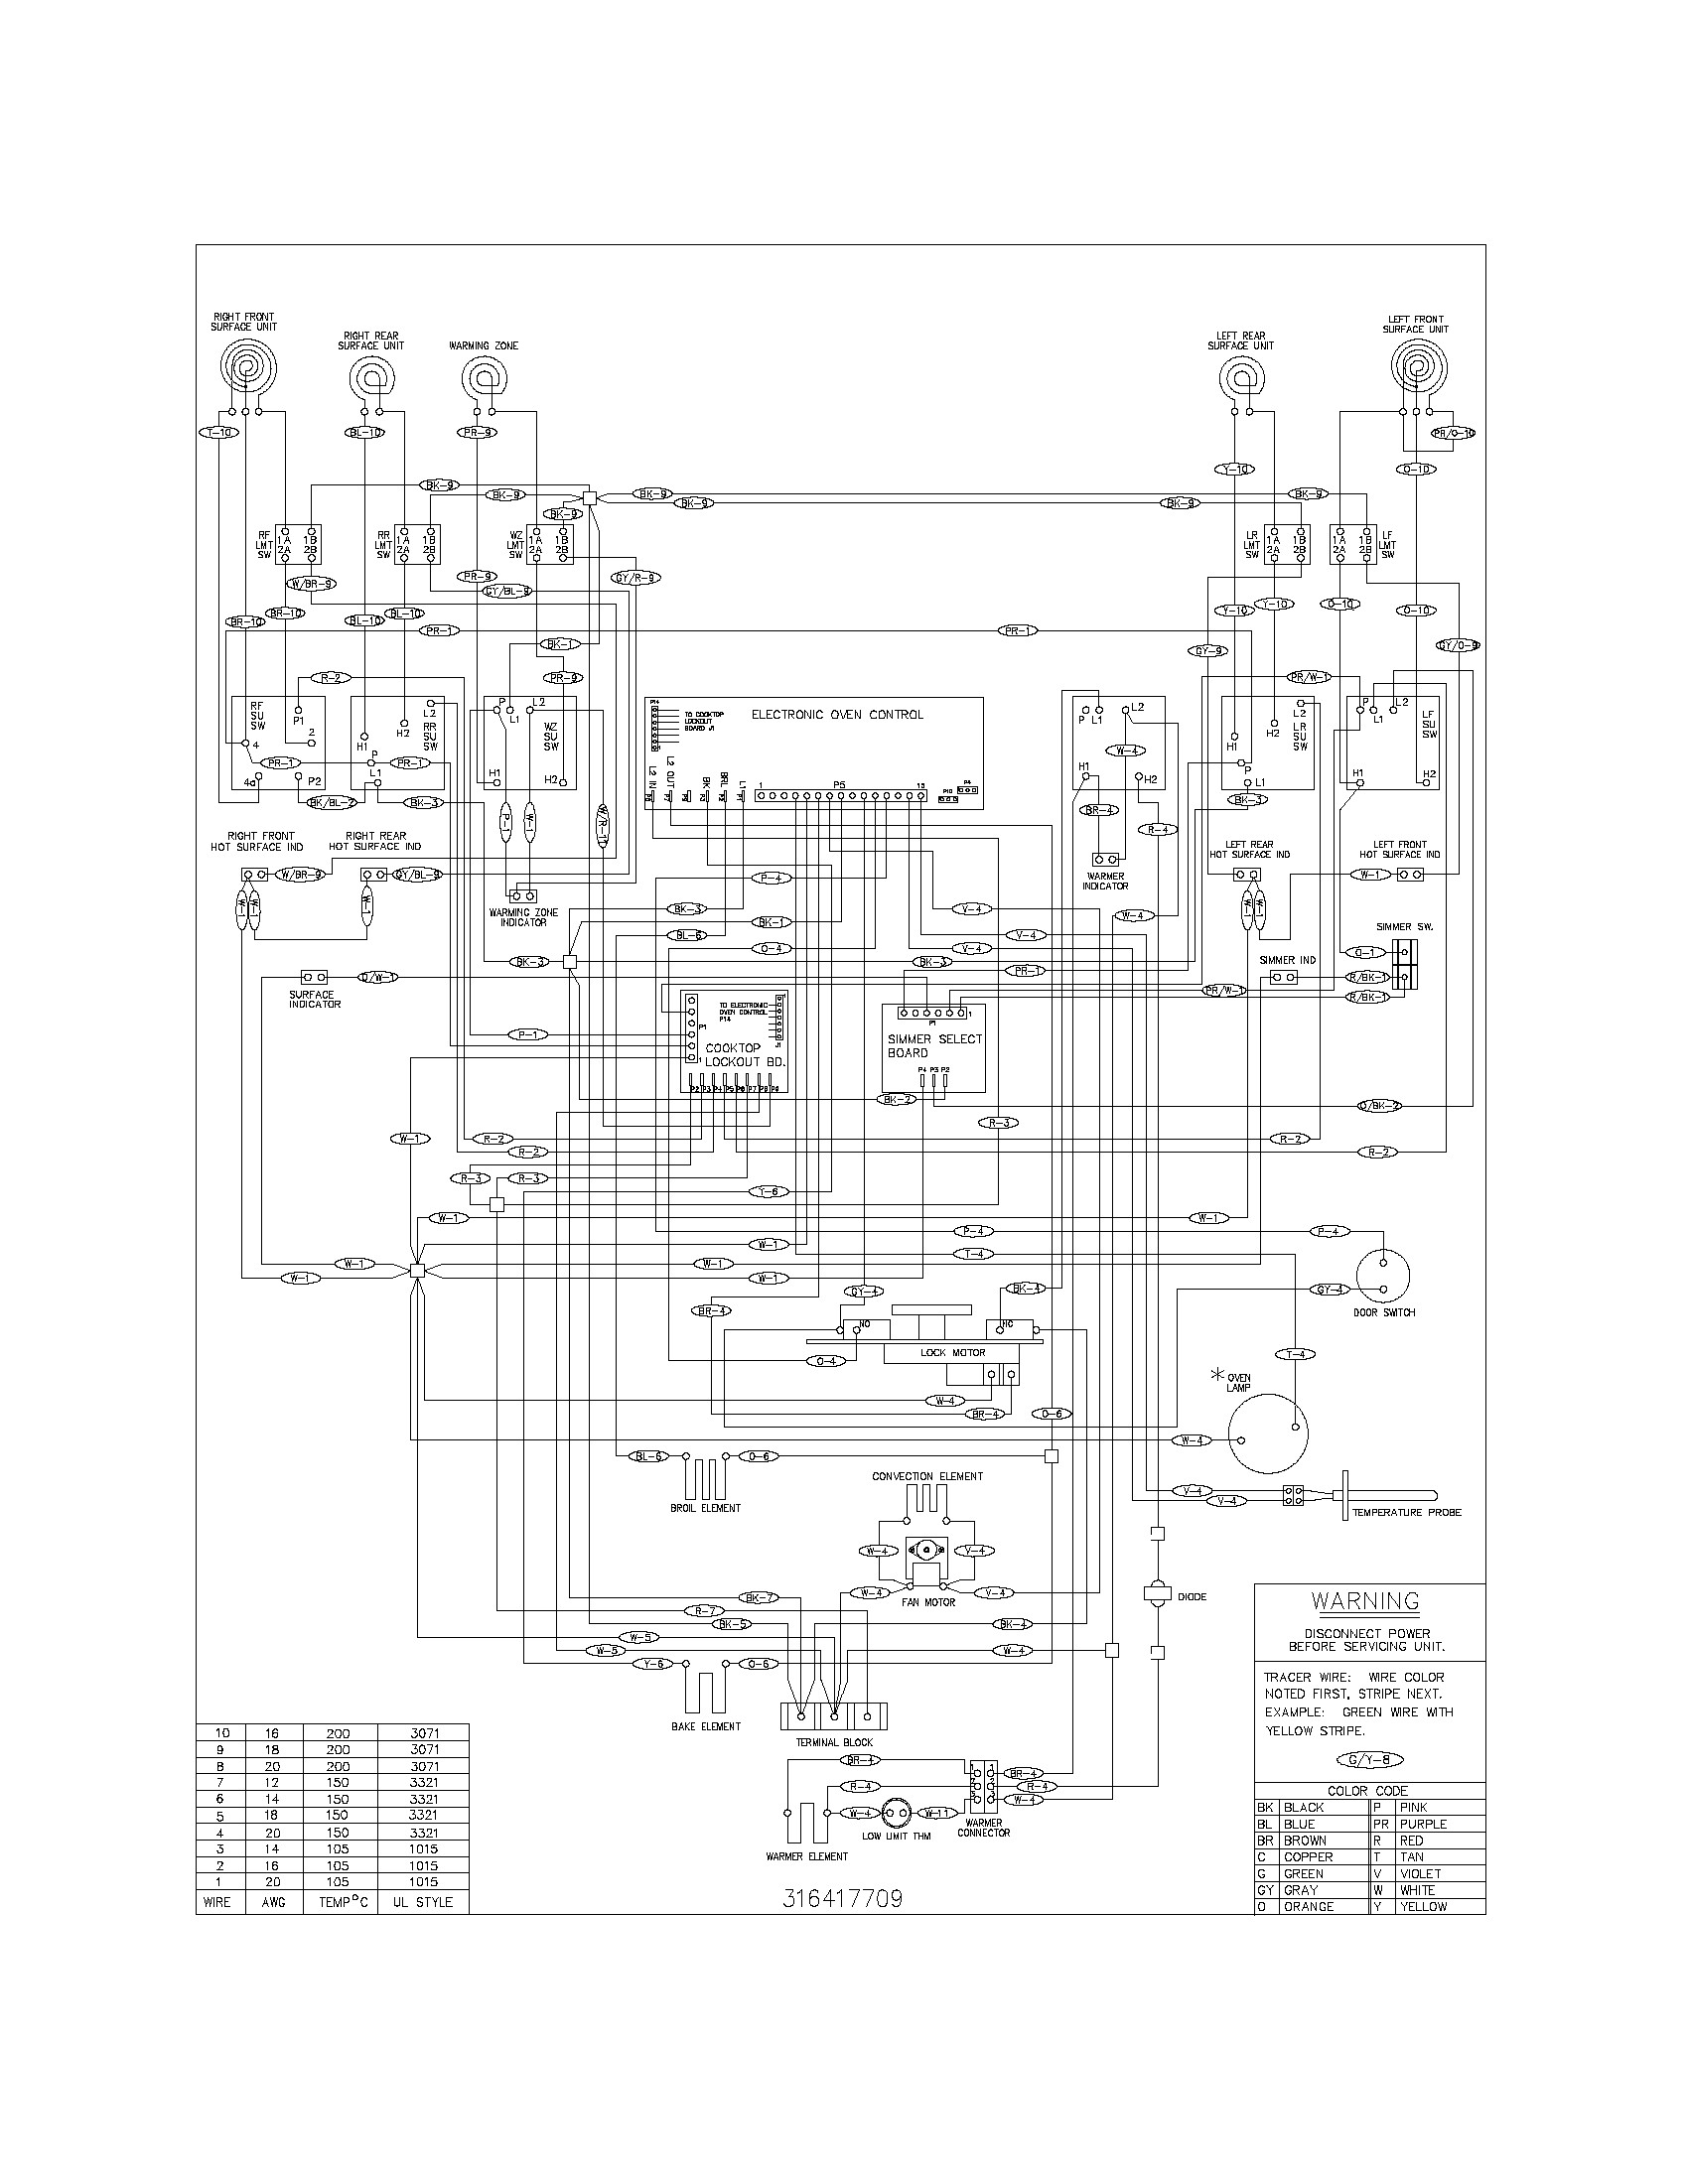 Wiring Diagram for Kenmore Dryer Unique Kenmore Elite Refrigerator Kenmore Dryer thermostat Wiring Diagram Image